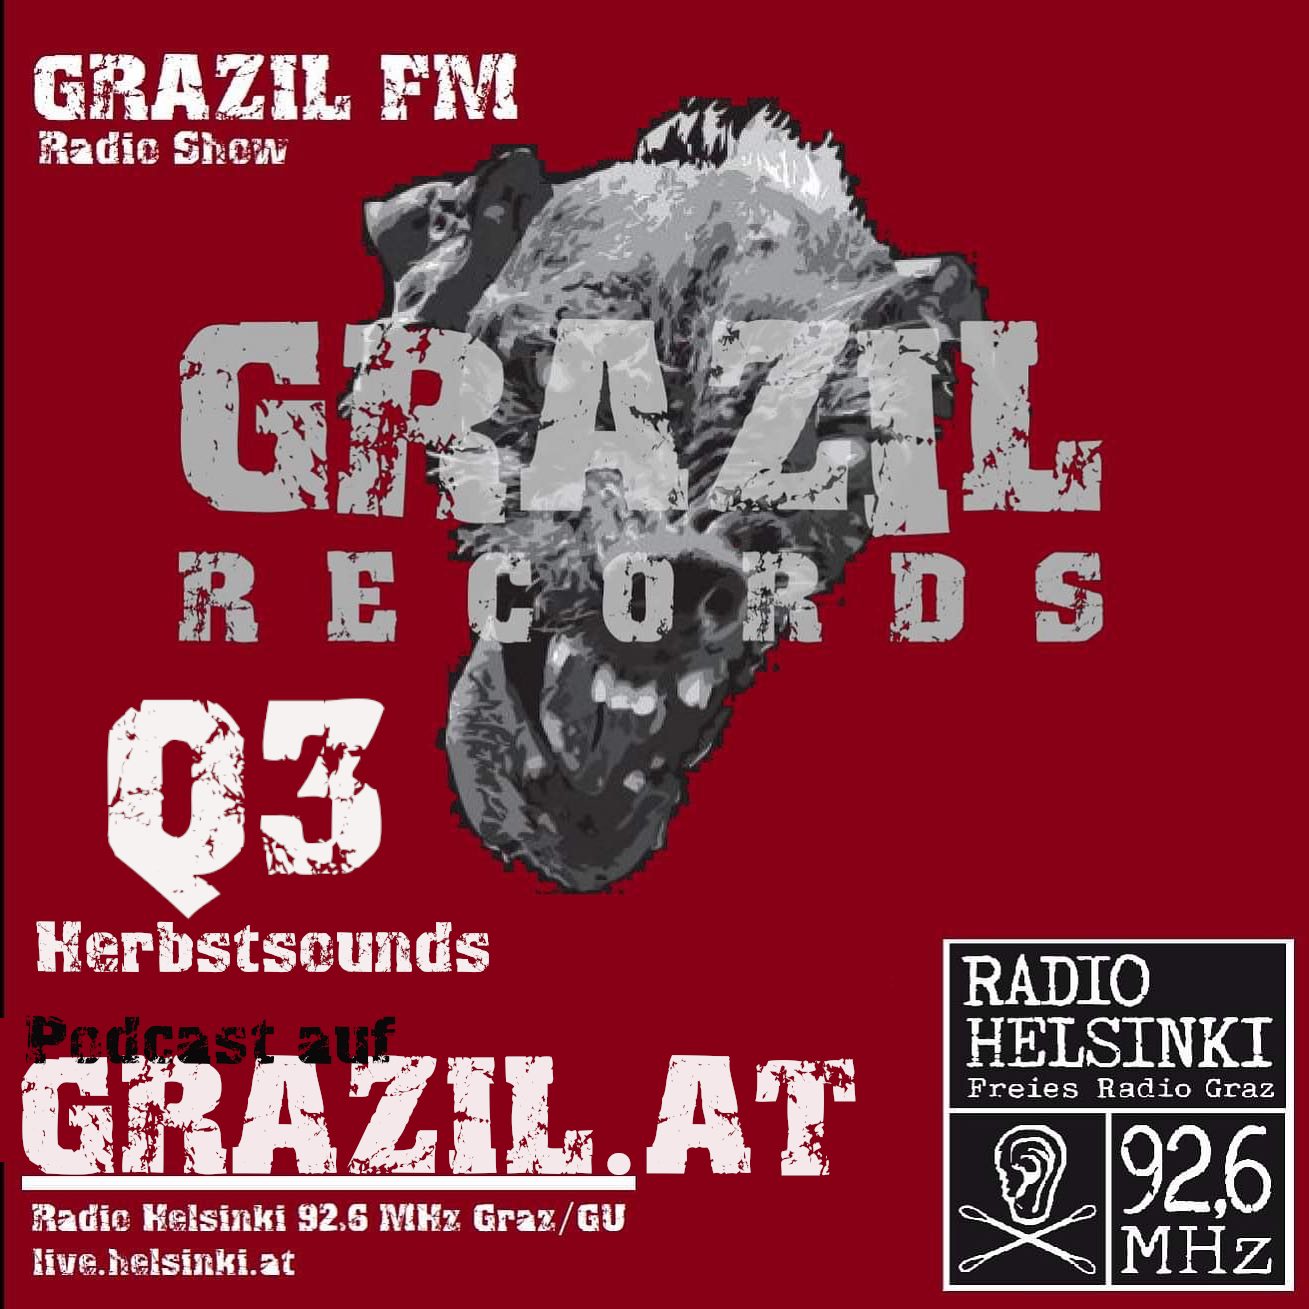 grazil FM grazil Records Q3 Herbstsounds Radio Helsinki Cle Pecher